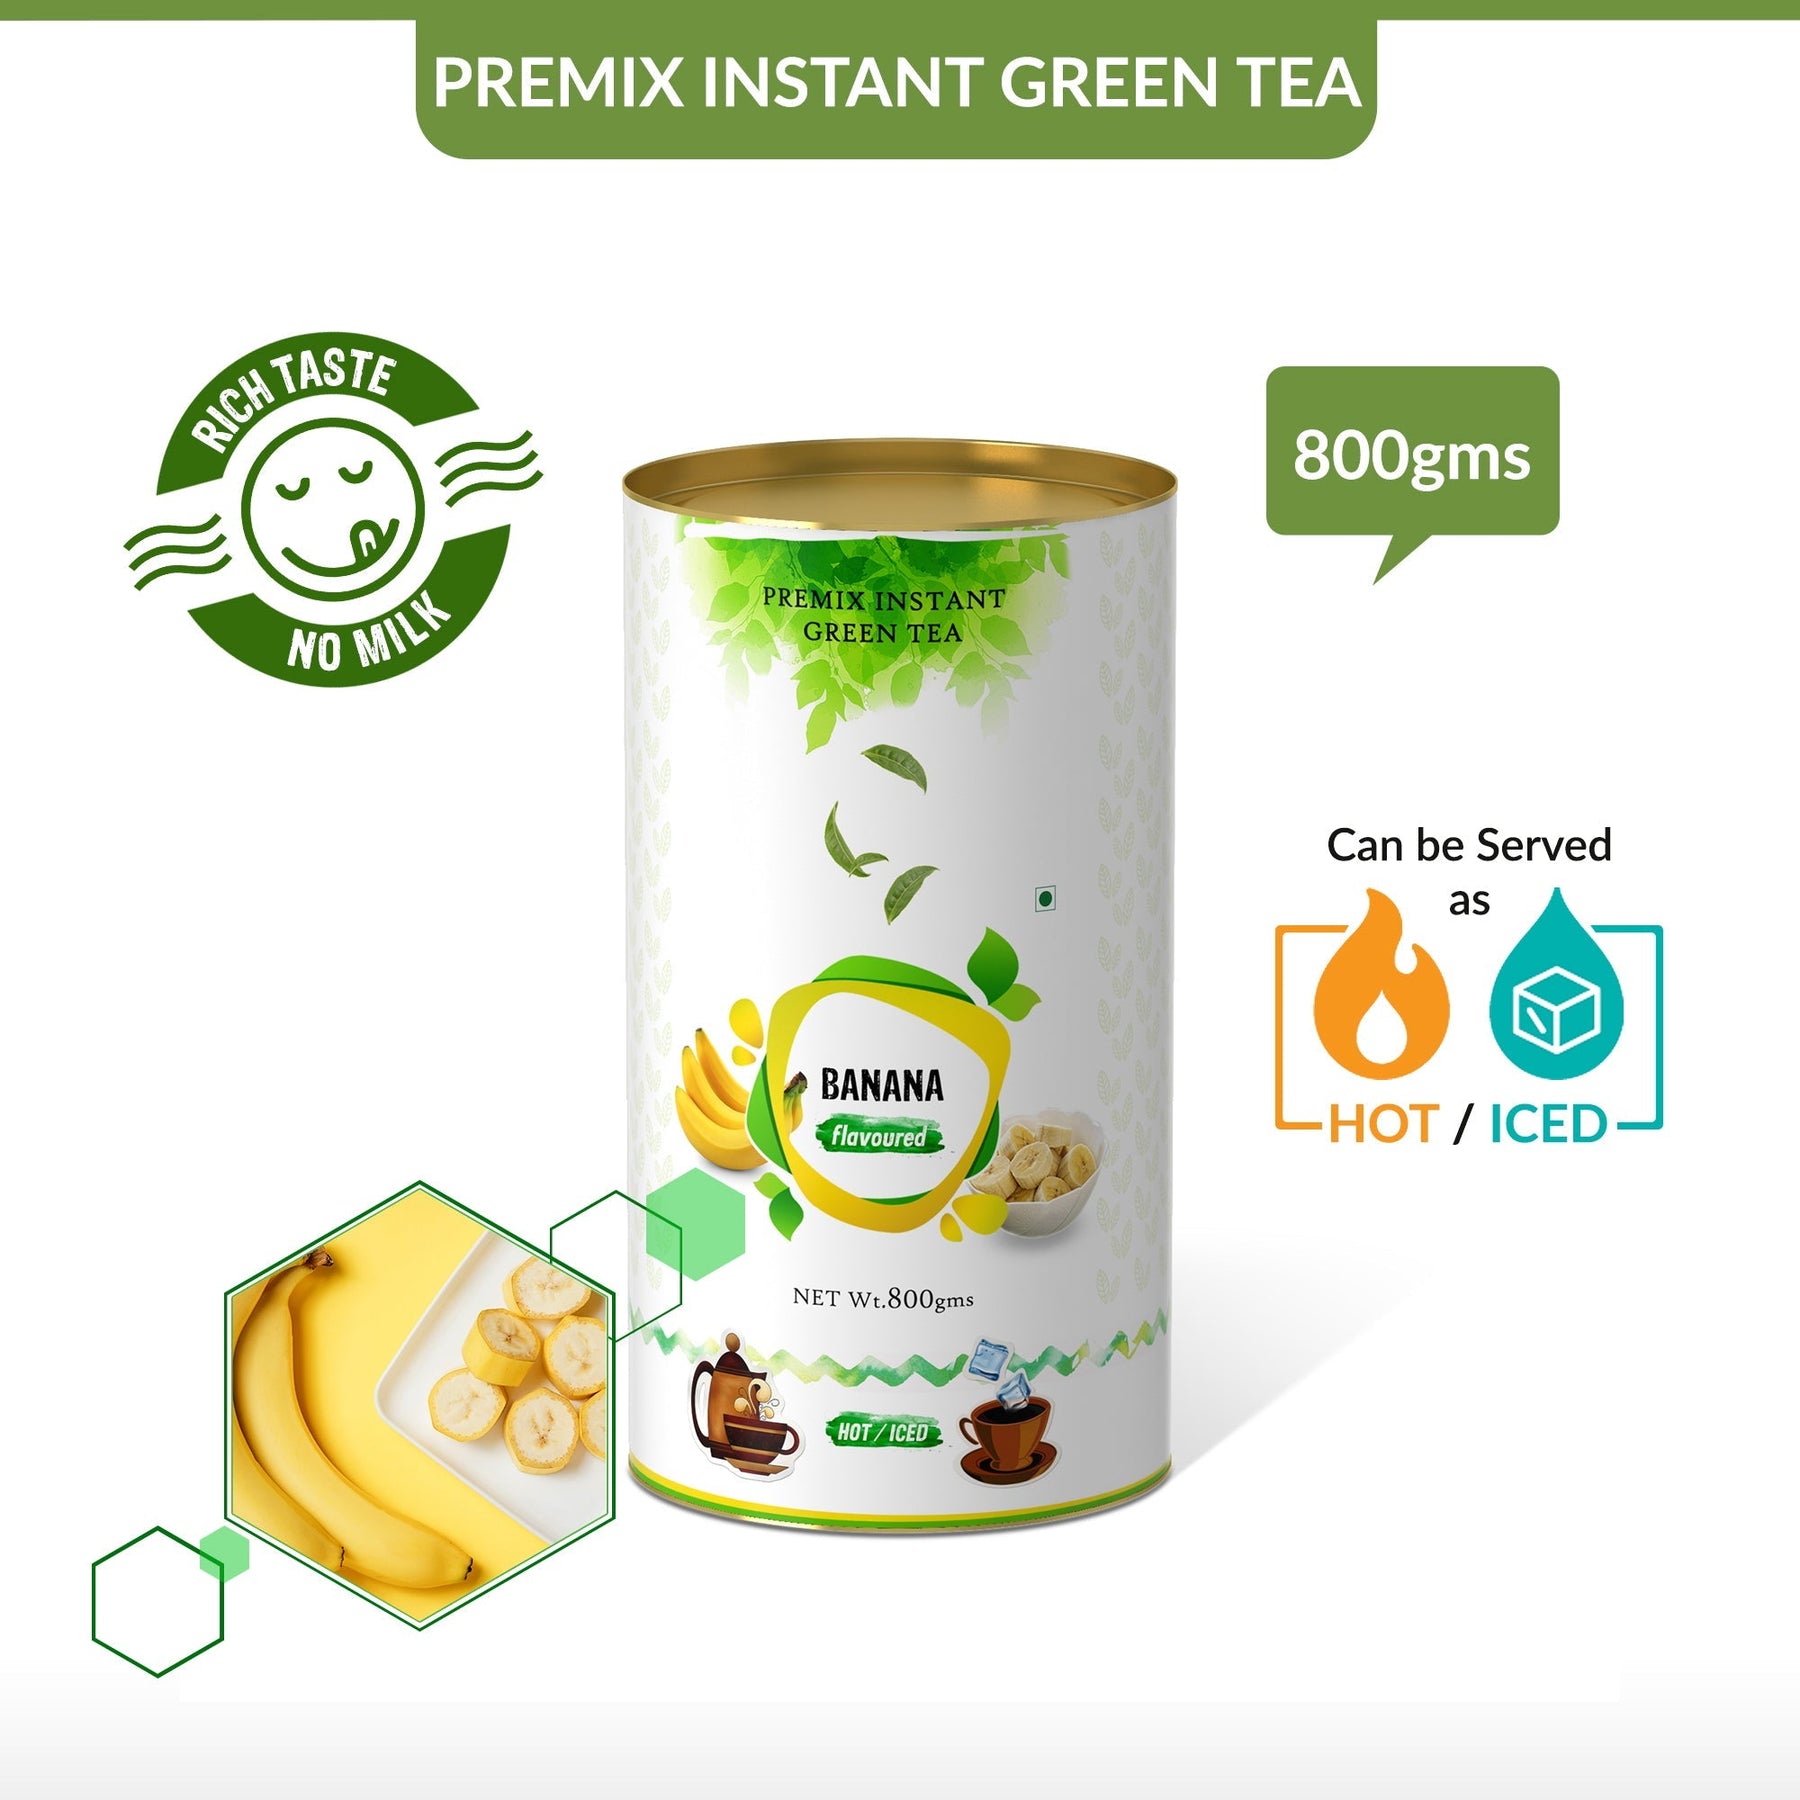 Banana Flavored Instant Green Tea - 800 gms